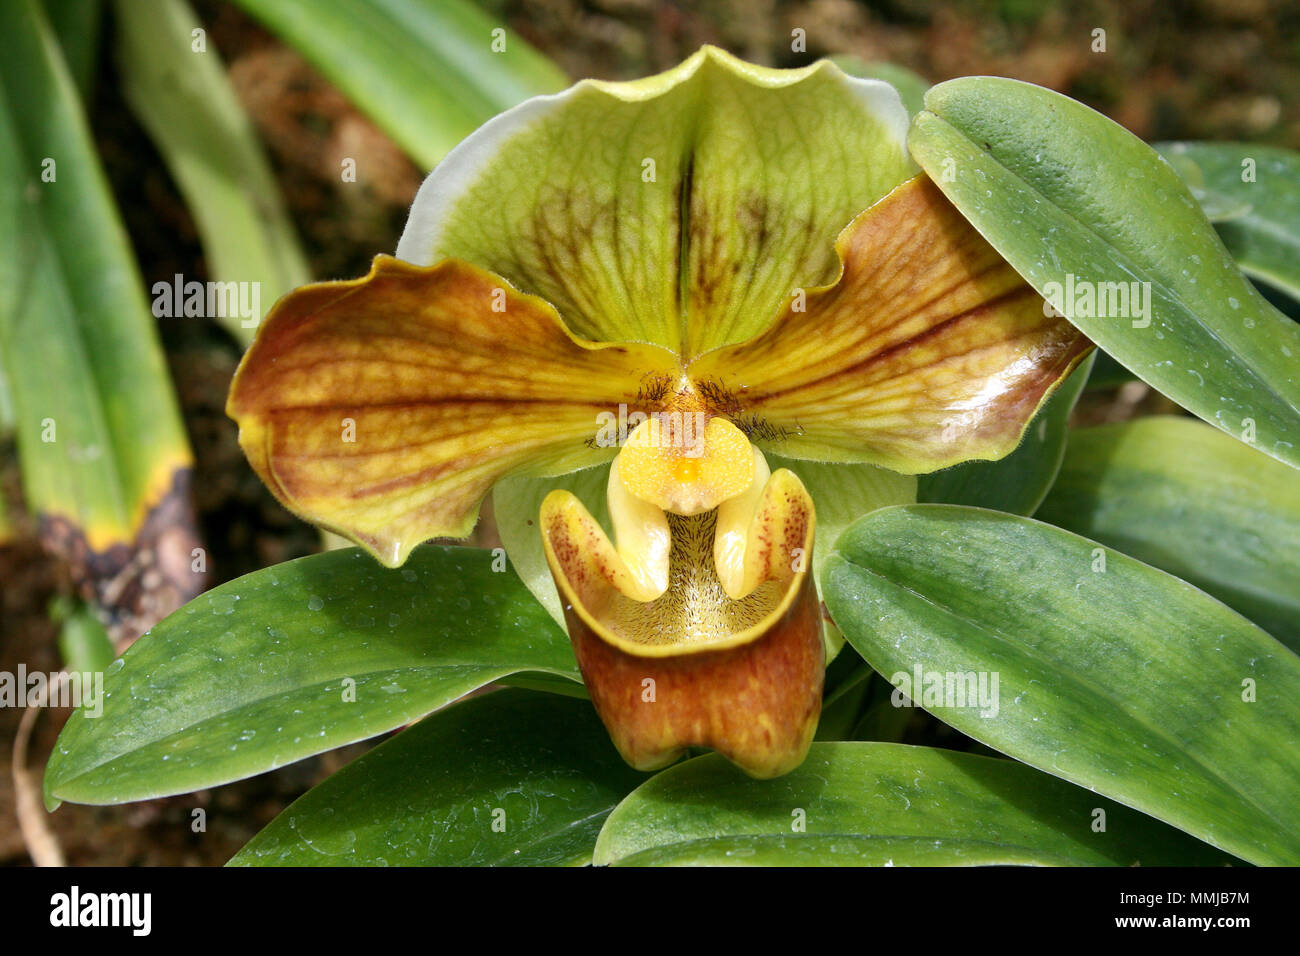 Paphiopedilum orchid flower CLOSE-UP Stock Photo